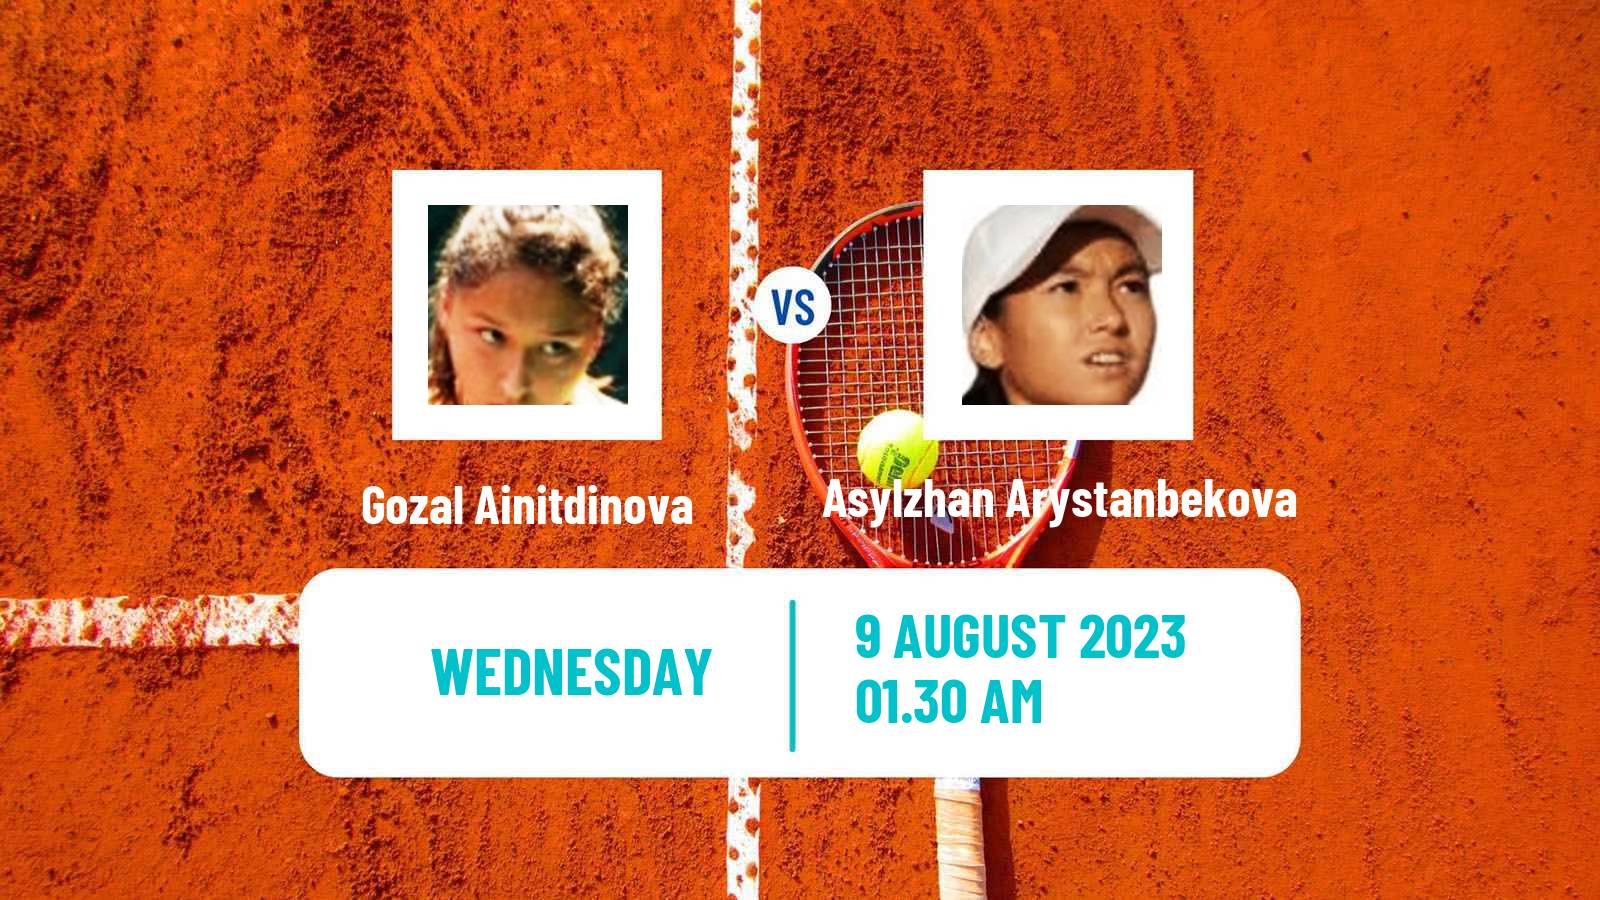 Tennis ITF W15 Ust Kamenogorsk Women Gozal Ainitdinova - Asylzhan Arystanbekova